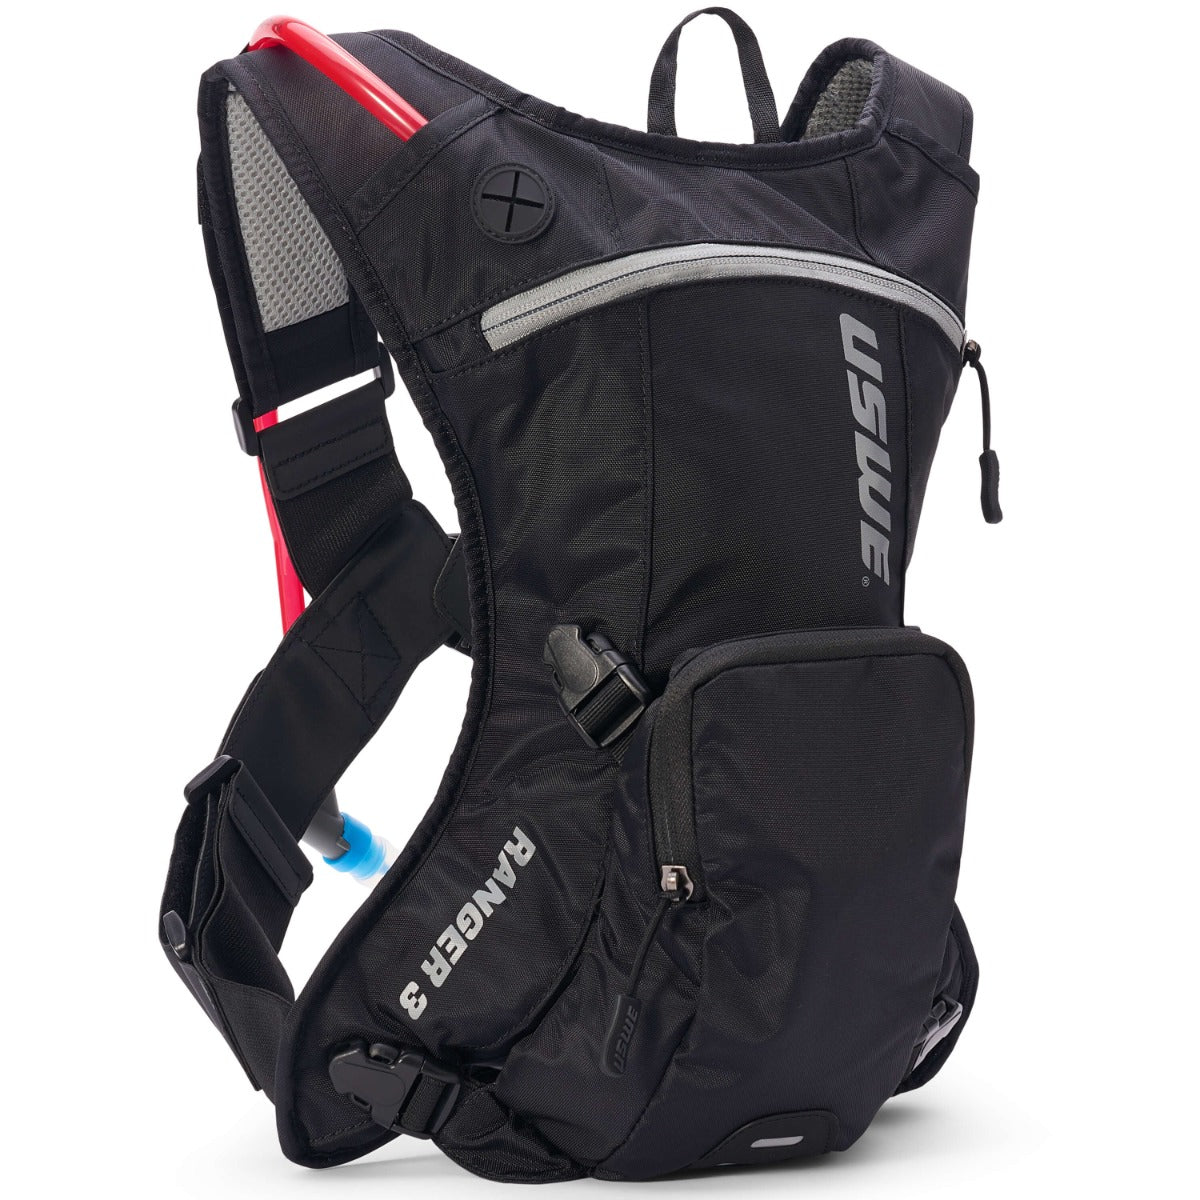 USWE - Ranger 3 Hydration Backpack